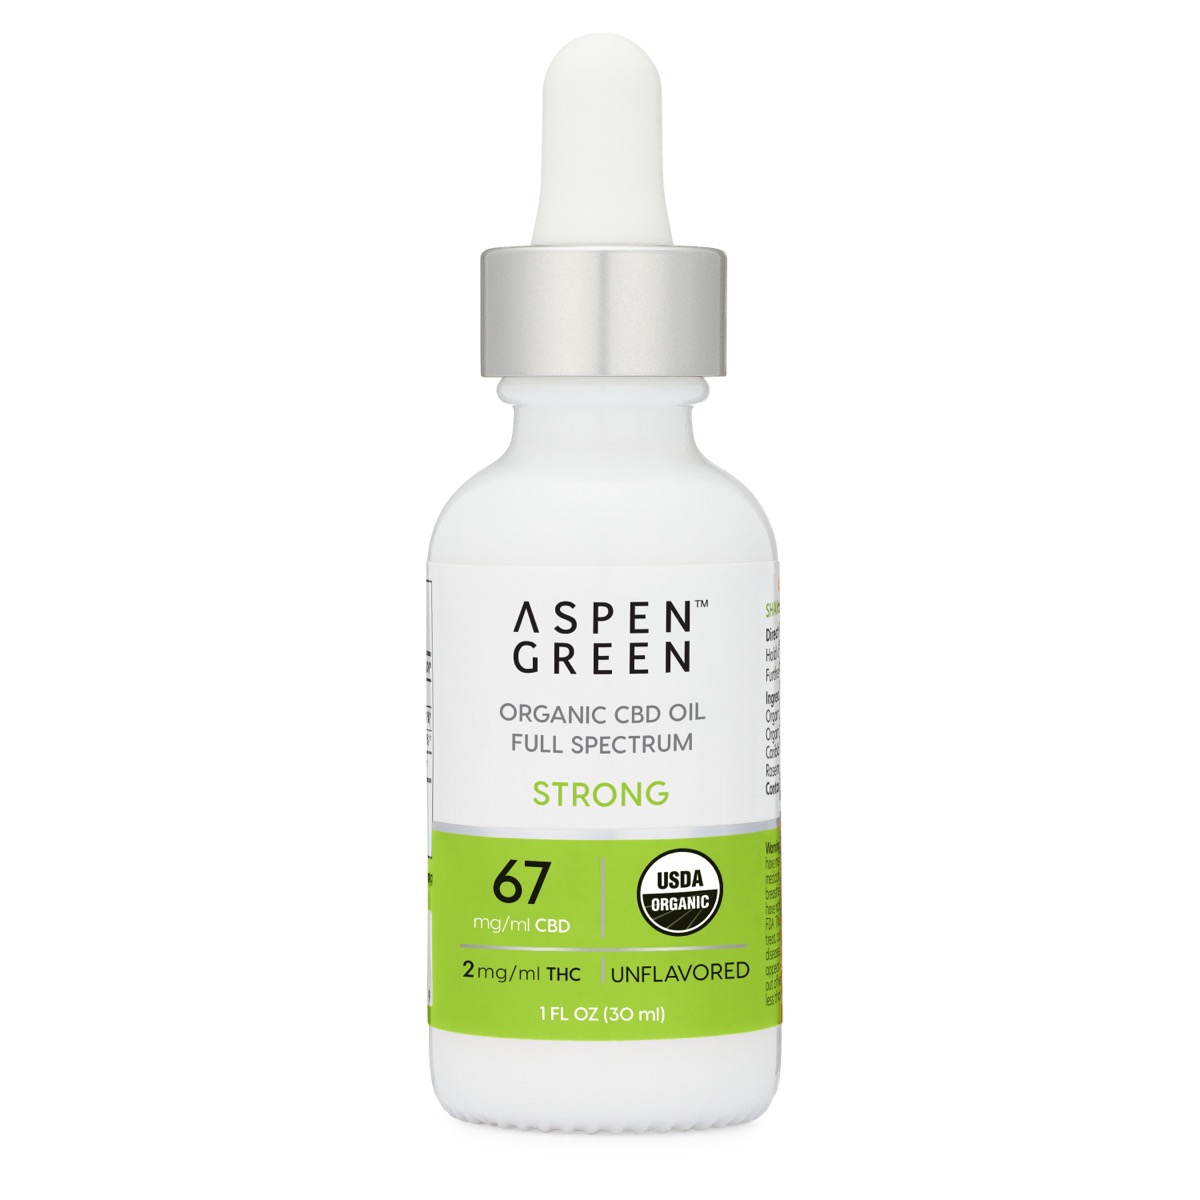 Aspen Green Strong CBD Oil Tincture - USDA Certified Organic, 67mg/ml CBD, Unflavored